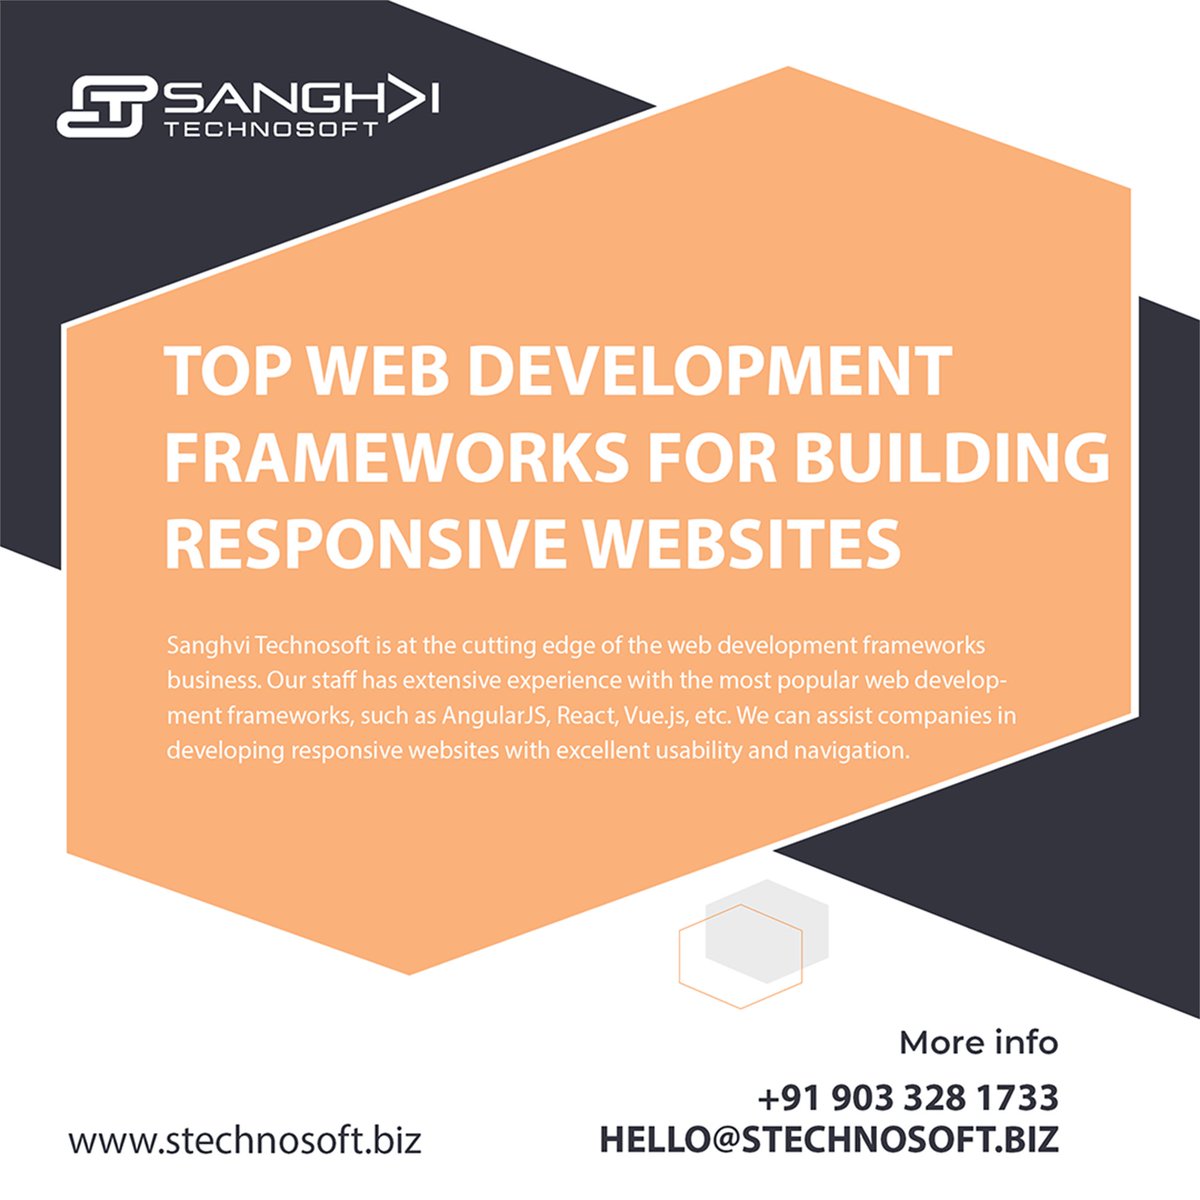 Top web development frameworks for building responsive websites

#webdevelopment #responsivewebsites #frameworks #bootstrap #foundation #materialize #bulma #semanticui #frontend #webdesign #webdeveloper #coding #programming